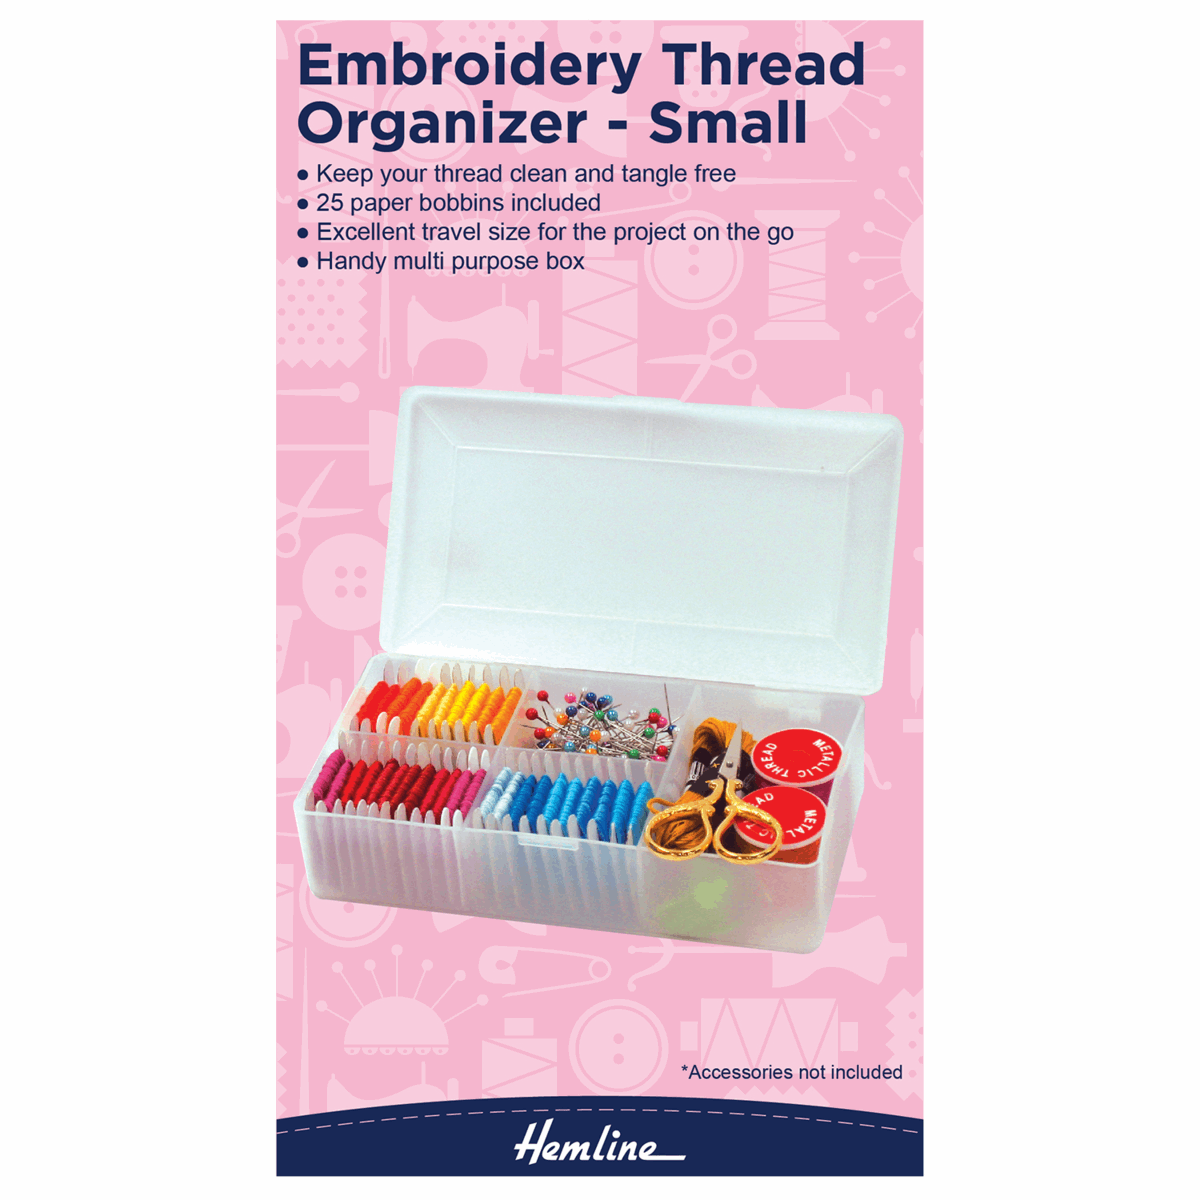 Embroidery Thread Organiser - Small by Hemline 